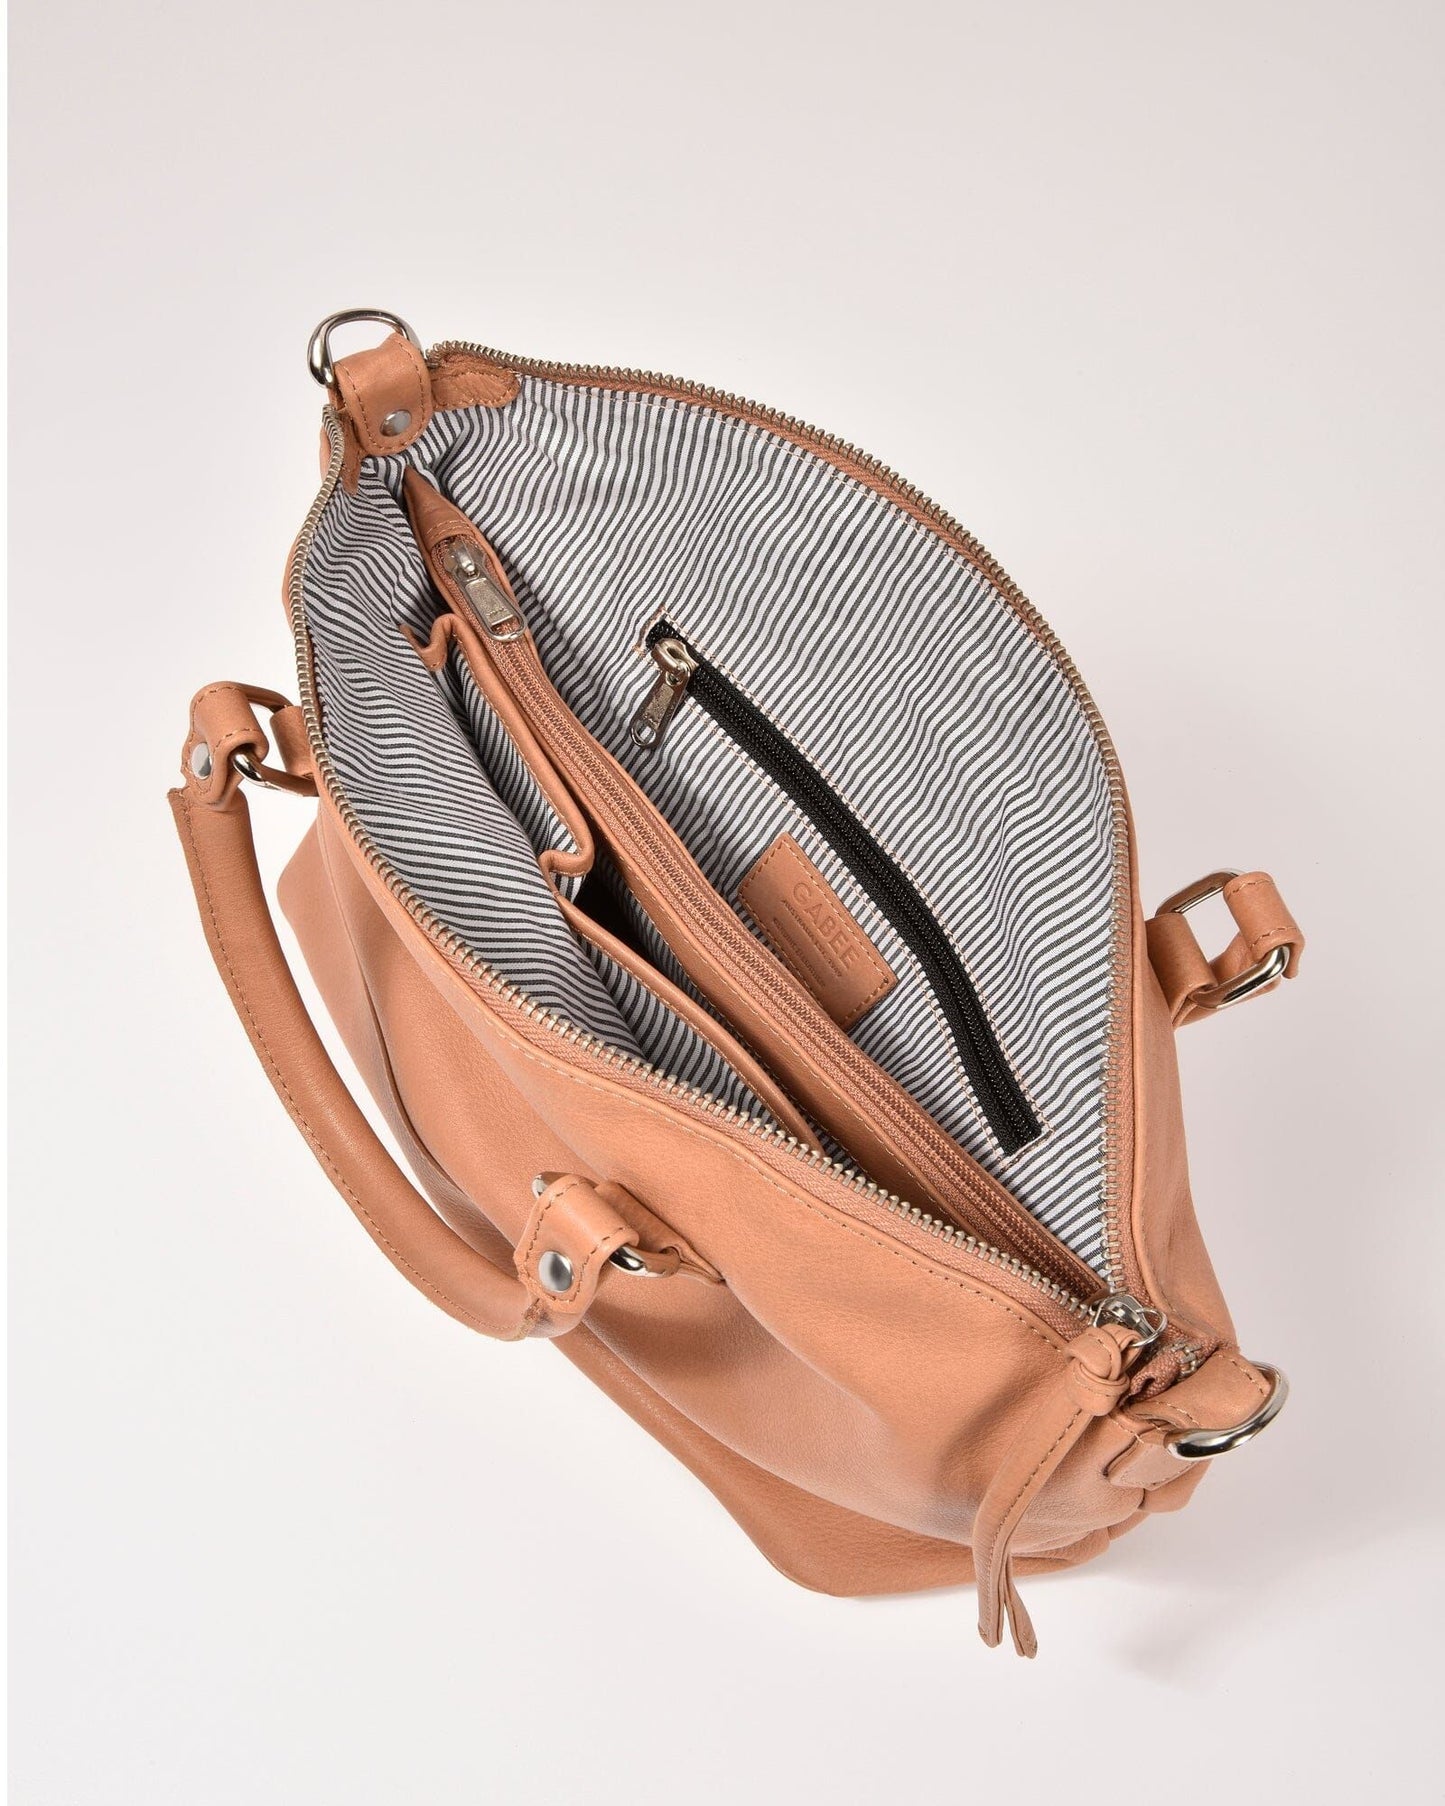 GABEE-Adriana Soft Leather Handbag - rainbowbags